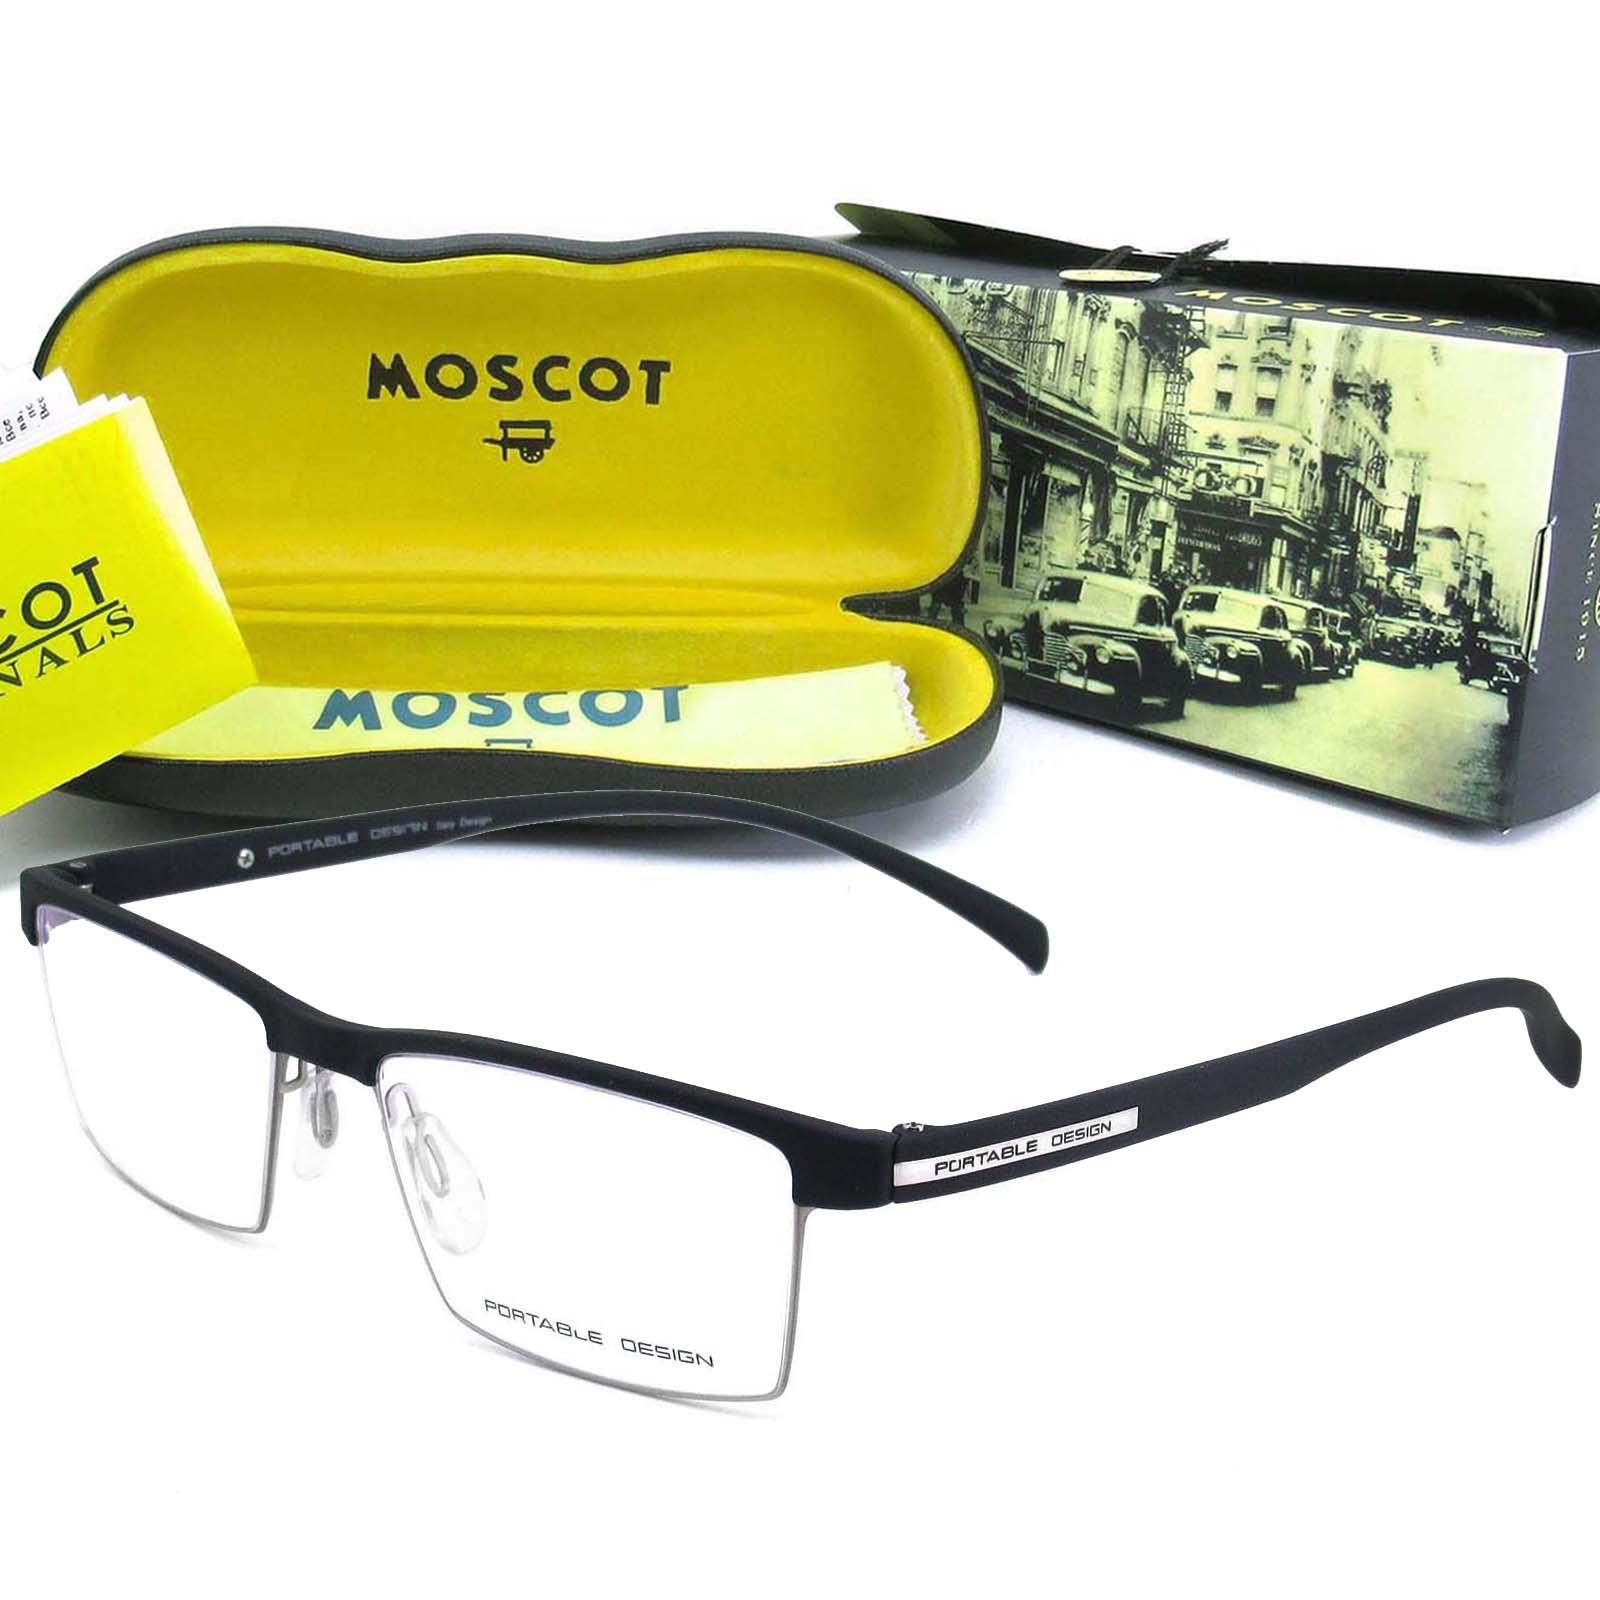 Fashion แว่นตา รุ่น Portable 9209 กรอบแว่นตา Eyeglass frame ( สำหรับตัดเลนส์ ) ทรงสปอร์ต วัสดุ TR-90 เบาและยืดหยุนได้สูง ขาข้อต่อ Spectacles Eyewear Top Glasses